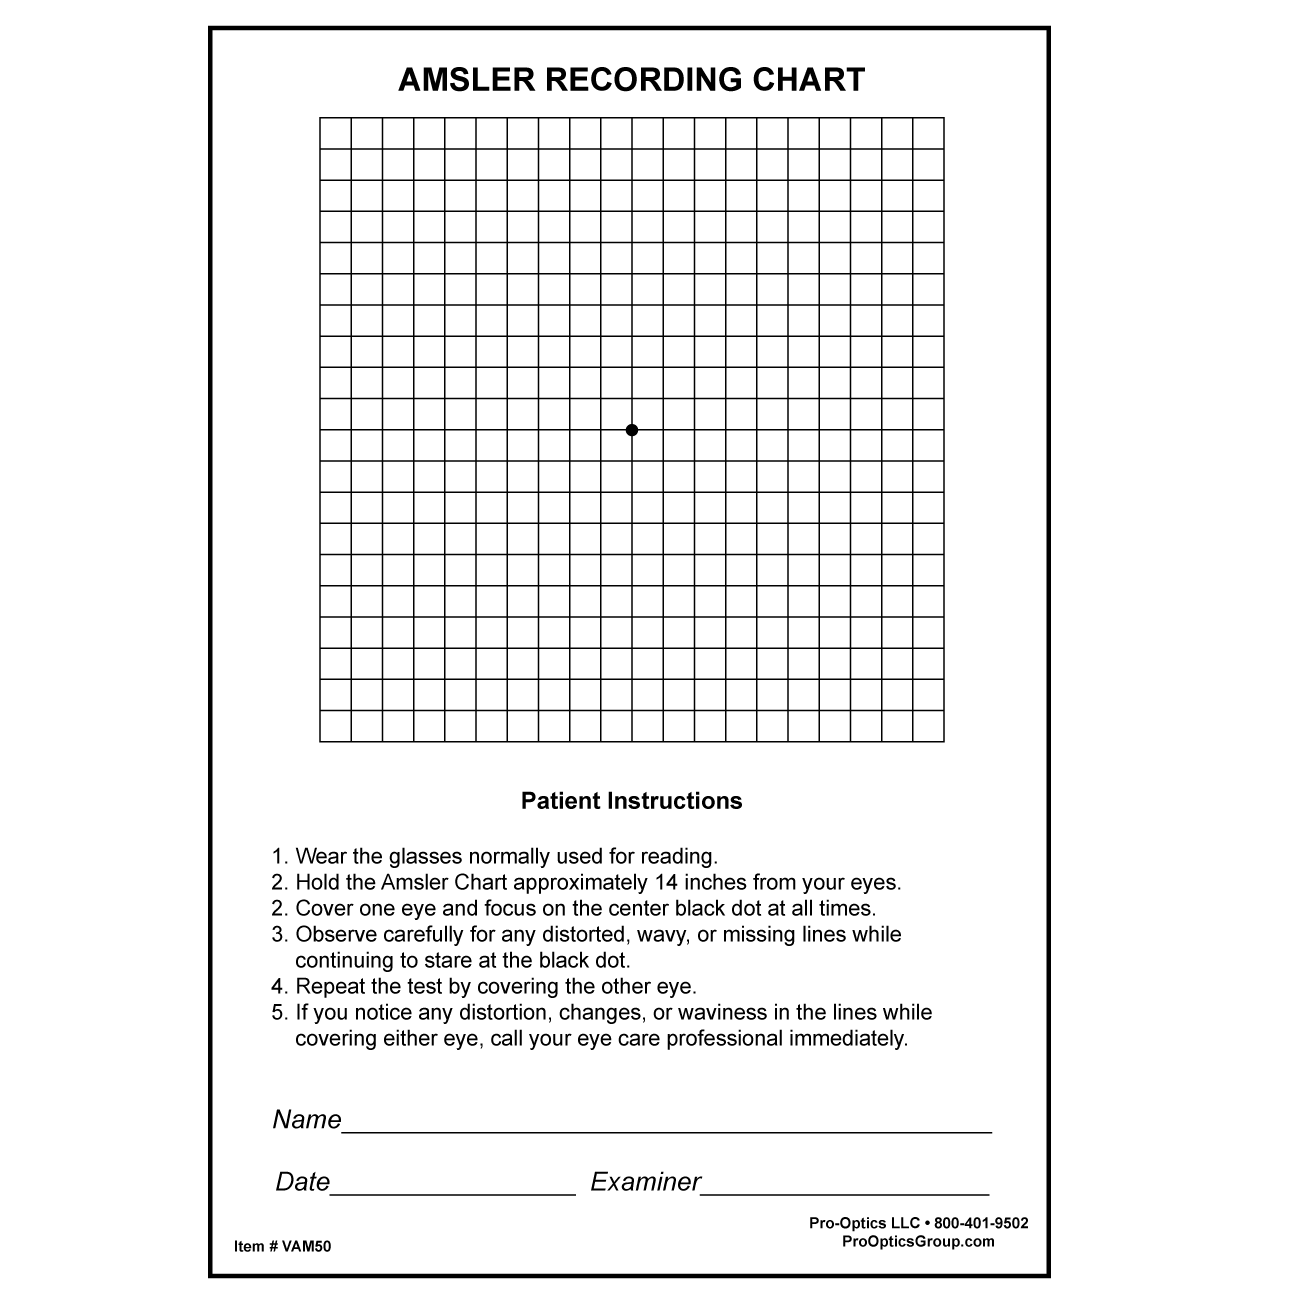 Pro-Optics Amsler Recording Pad - 50 Sheets (VAM50)